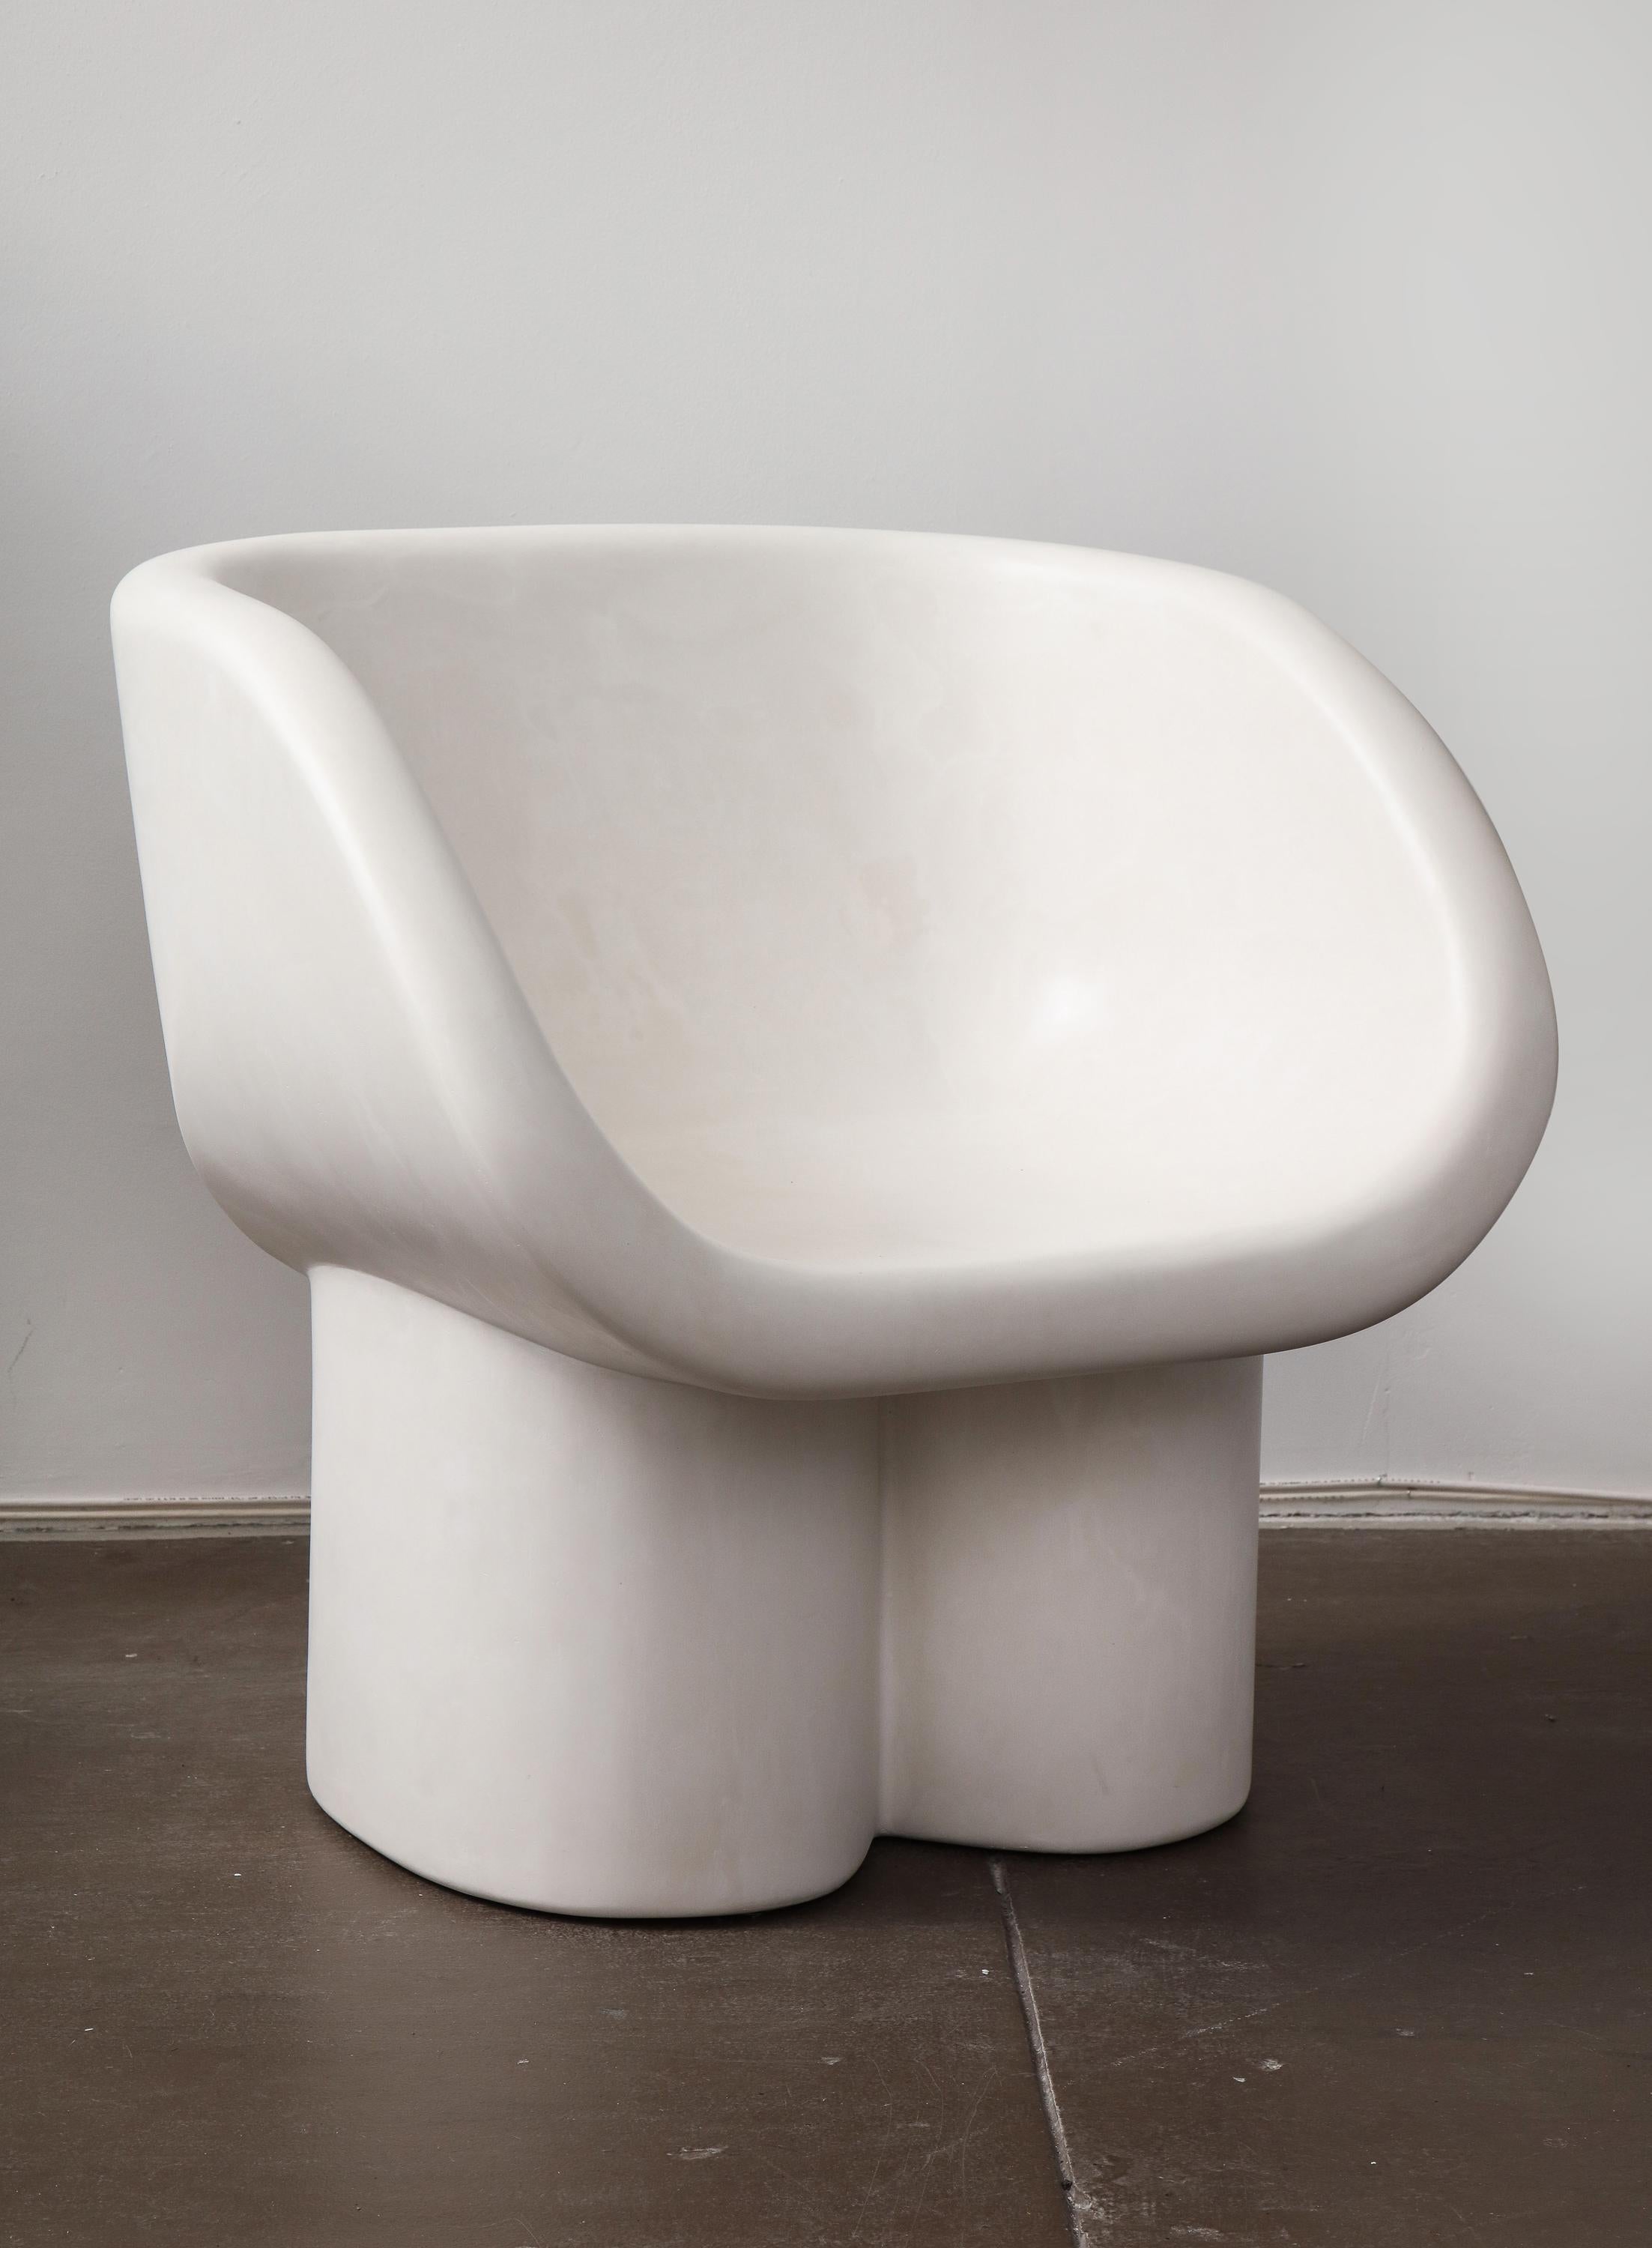 Reynold Rodriguez
Sometimes An (Untitled) Chair, 2020
Polished gypsum plaster
28 x 28 x 25 in
Ed. 1/8